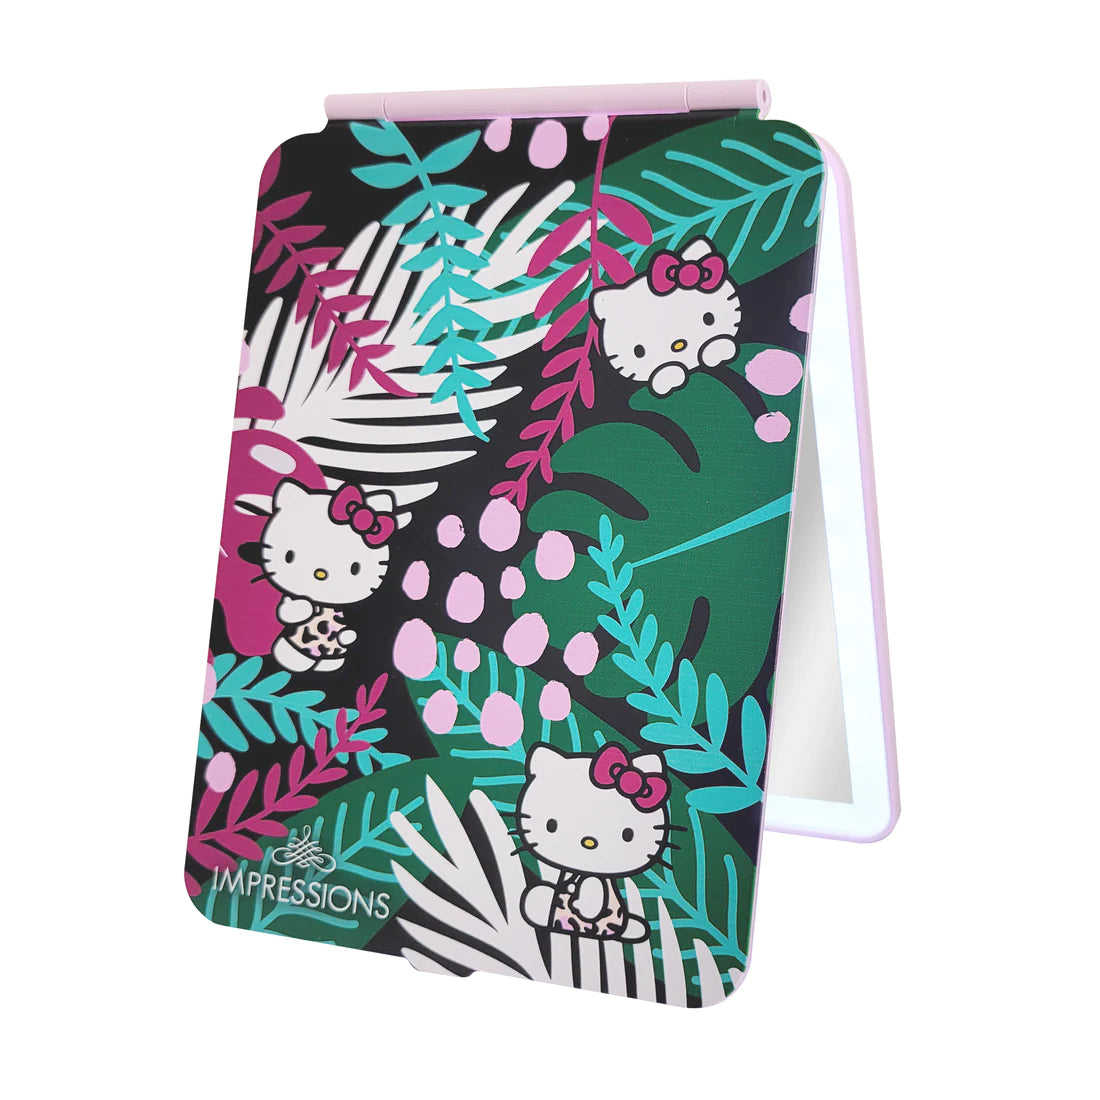 Impressions Vanity - Hello Kitty Touch Pad Mini Tri-Tone LED Makeup Mirror Animal